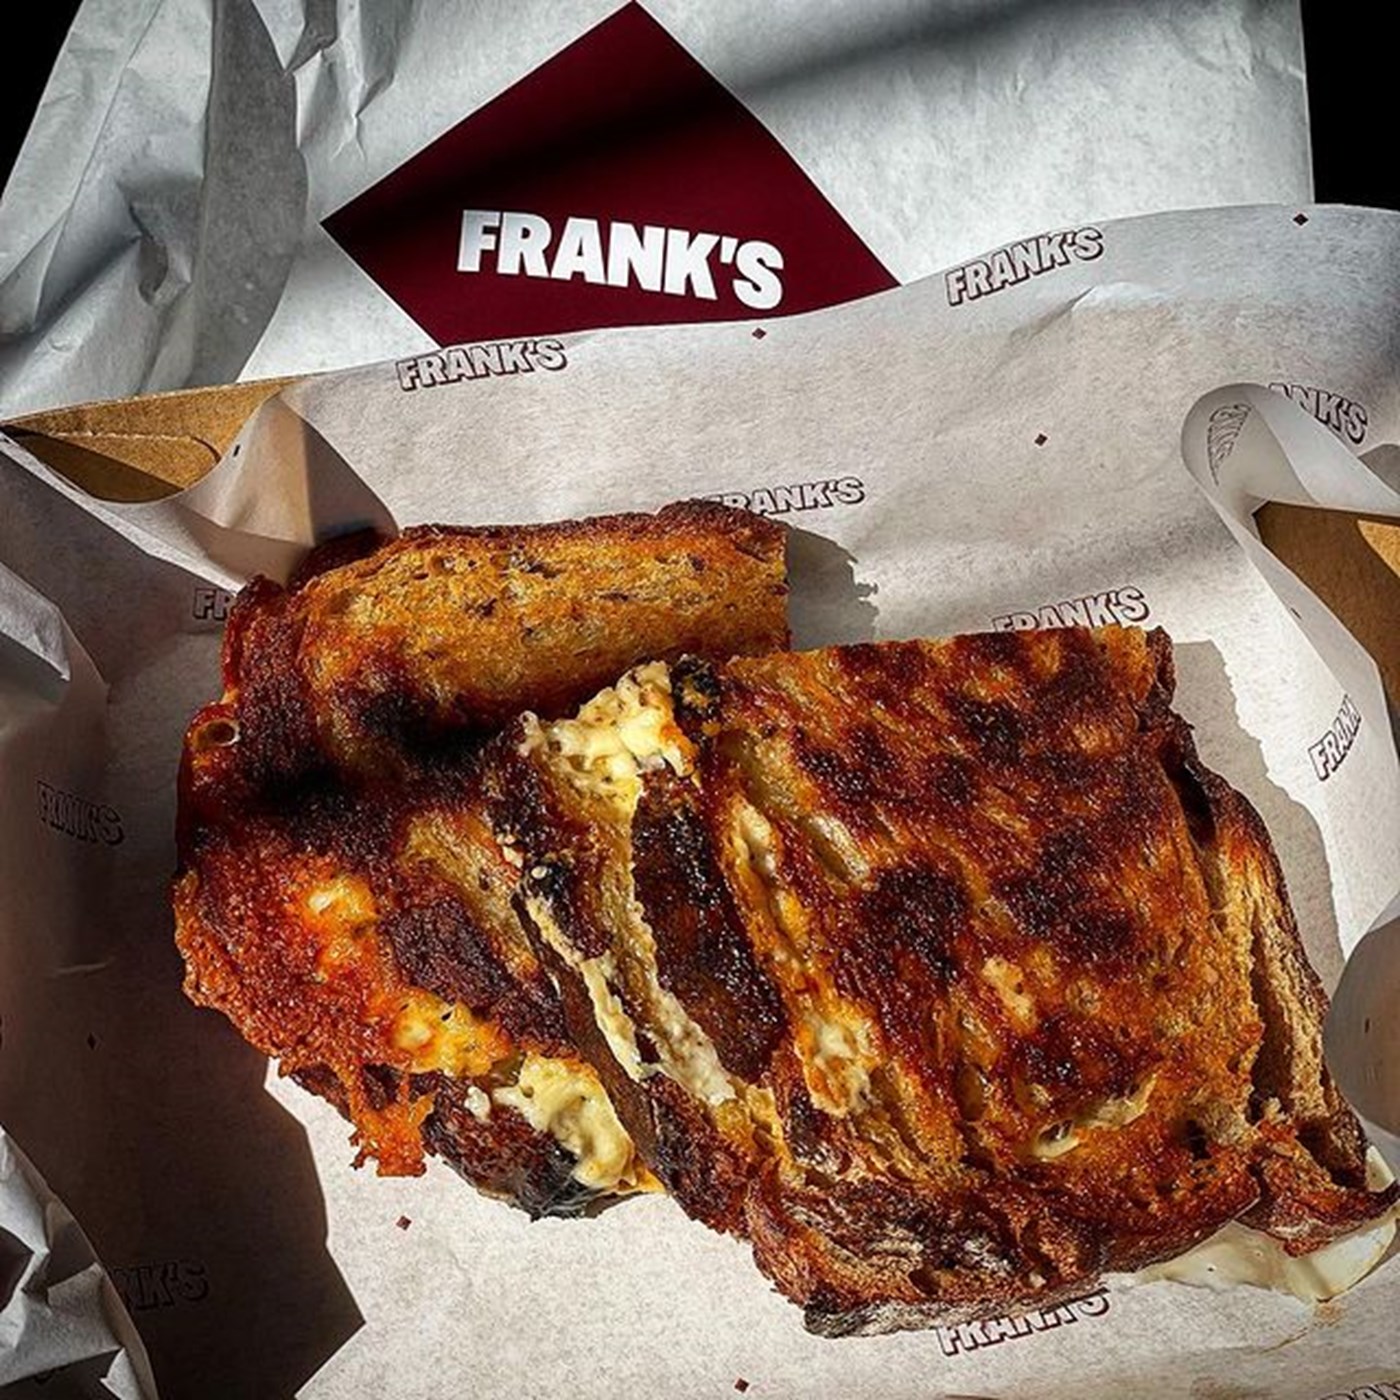 Frank's Deli (Image Credit: @lollieats)